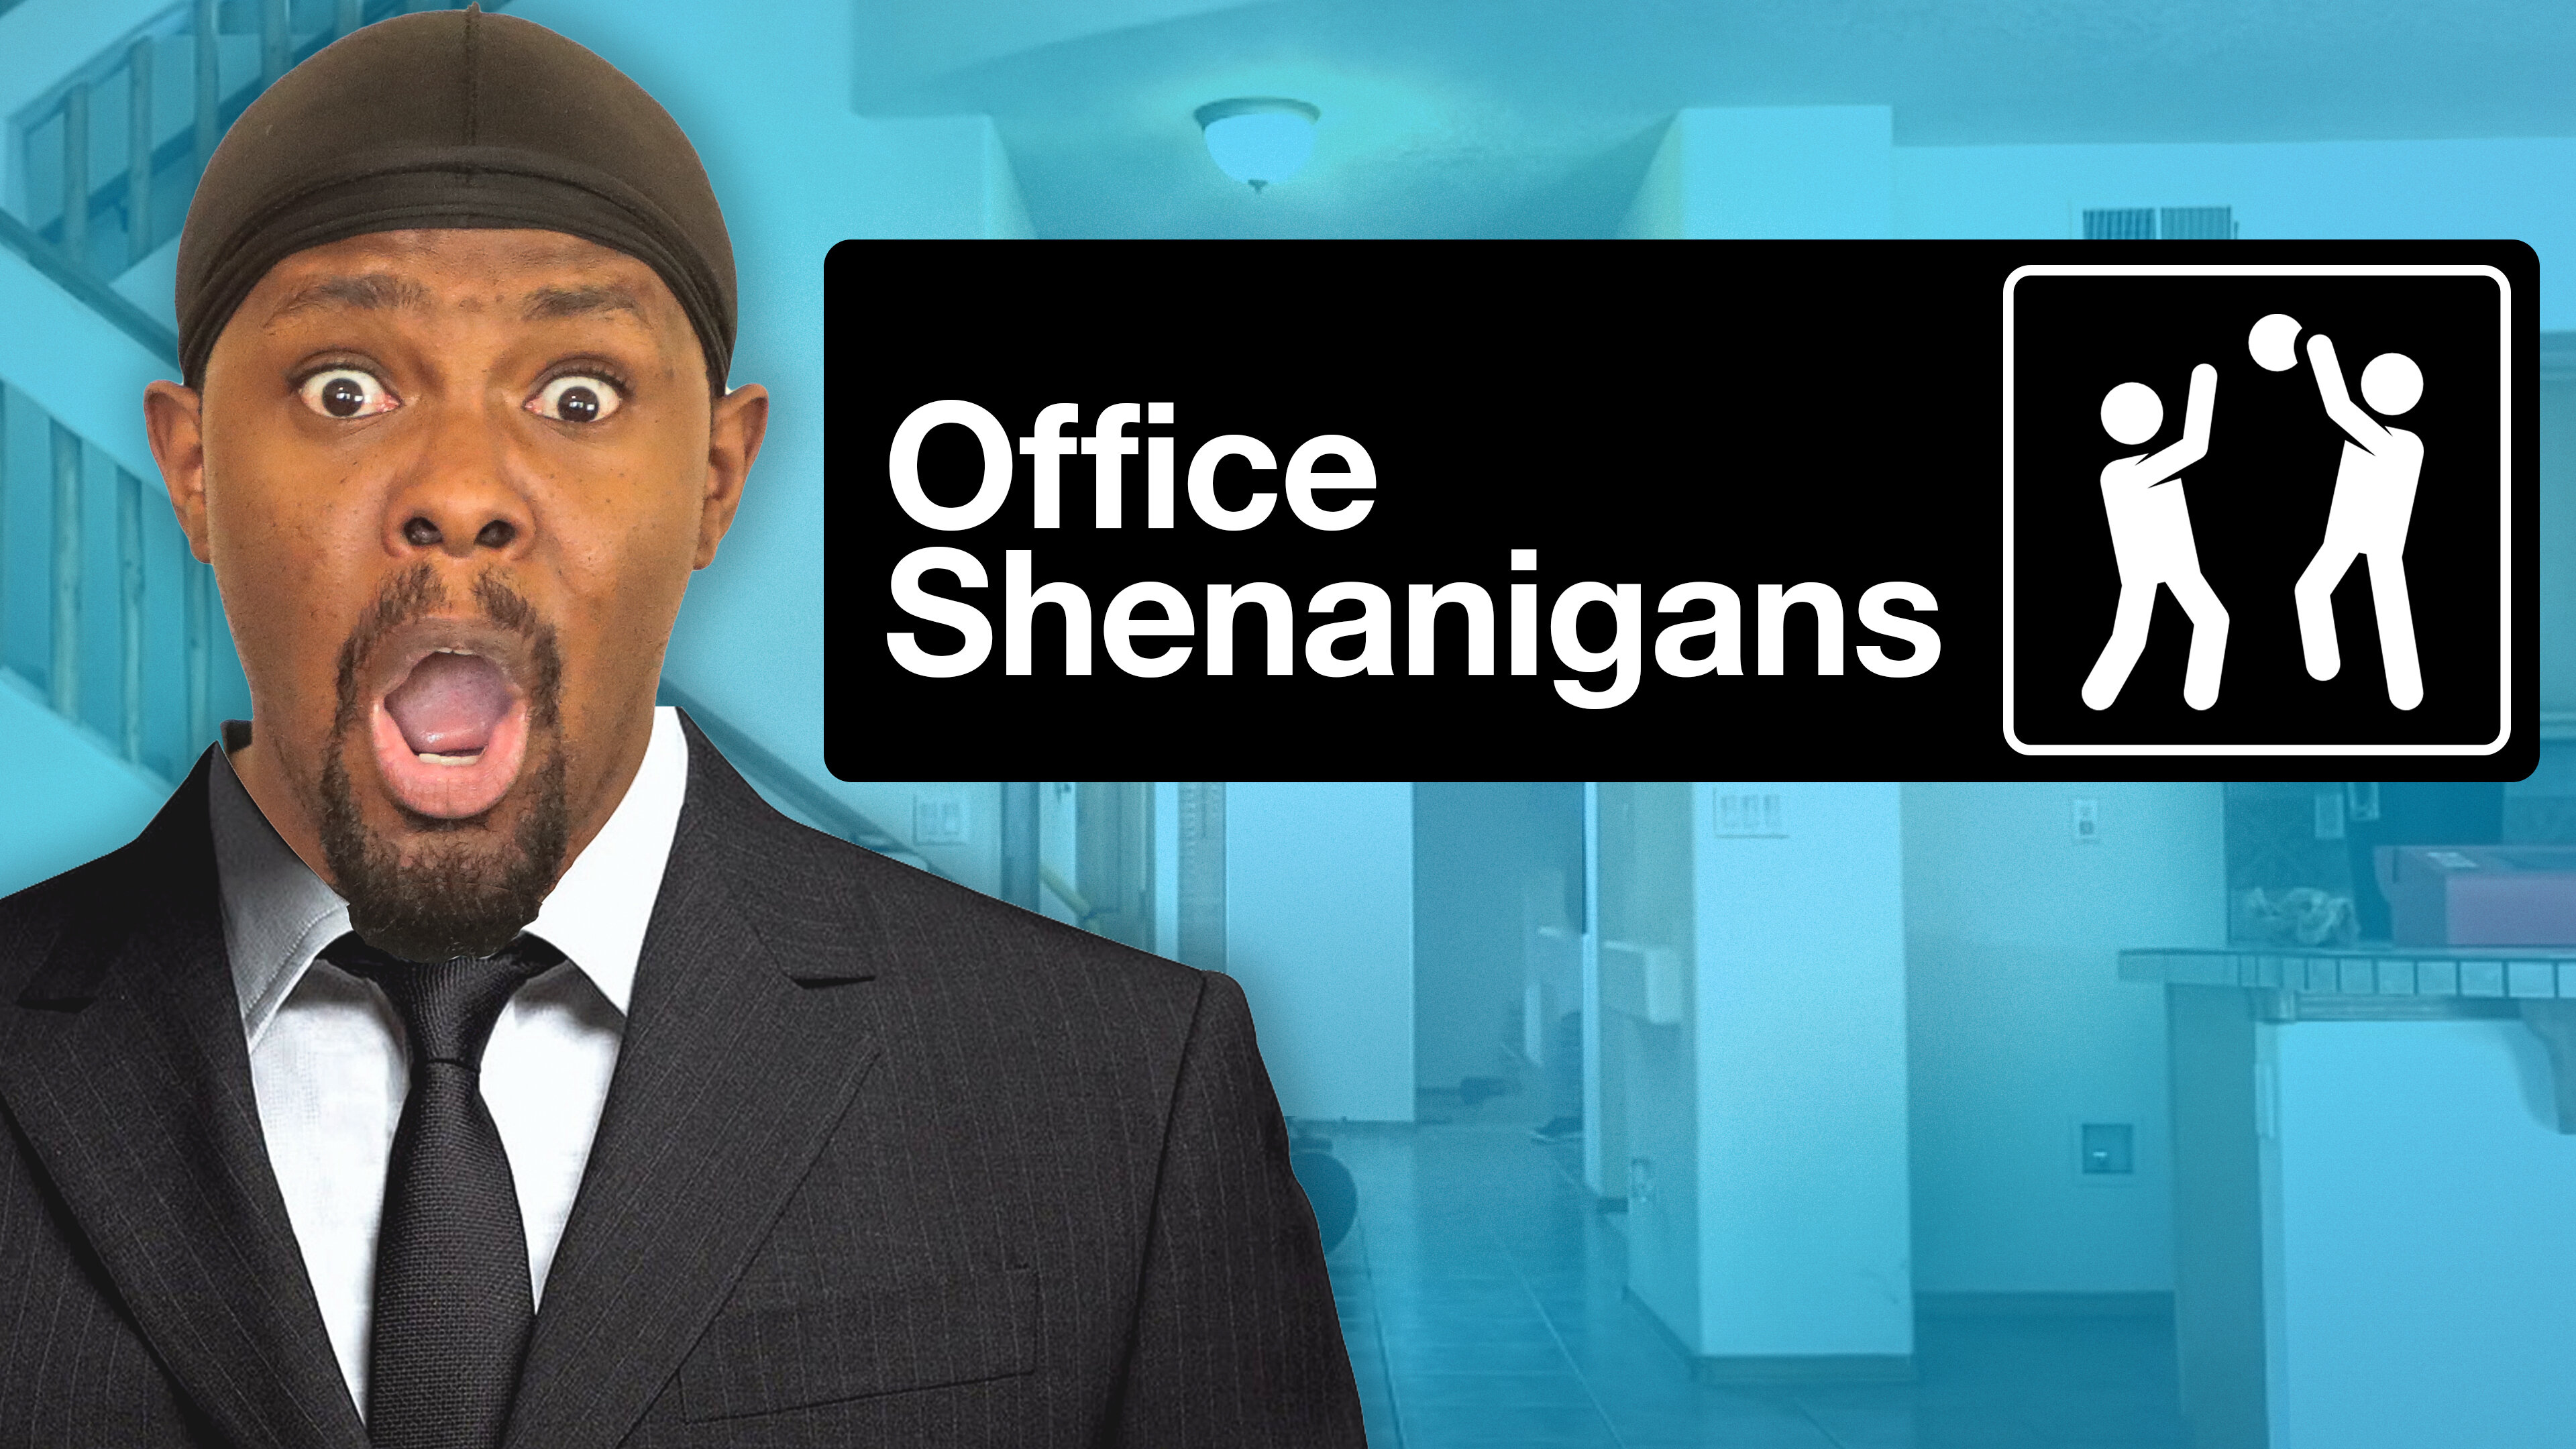 Office Shenanigans